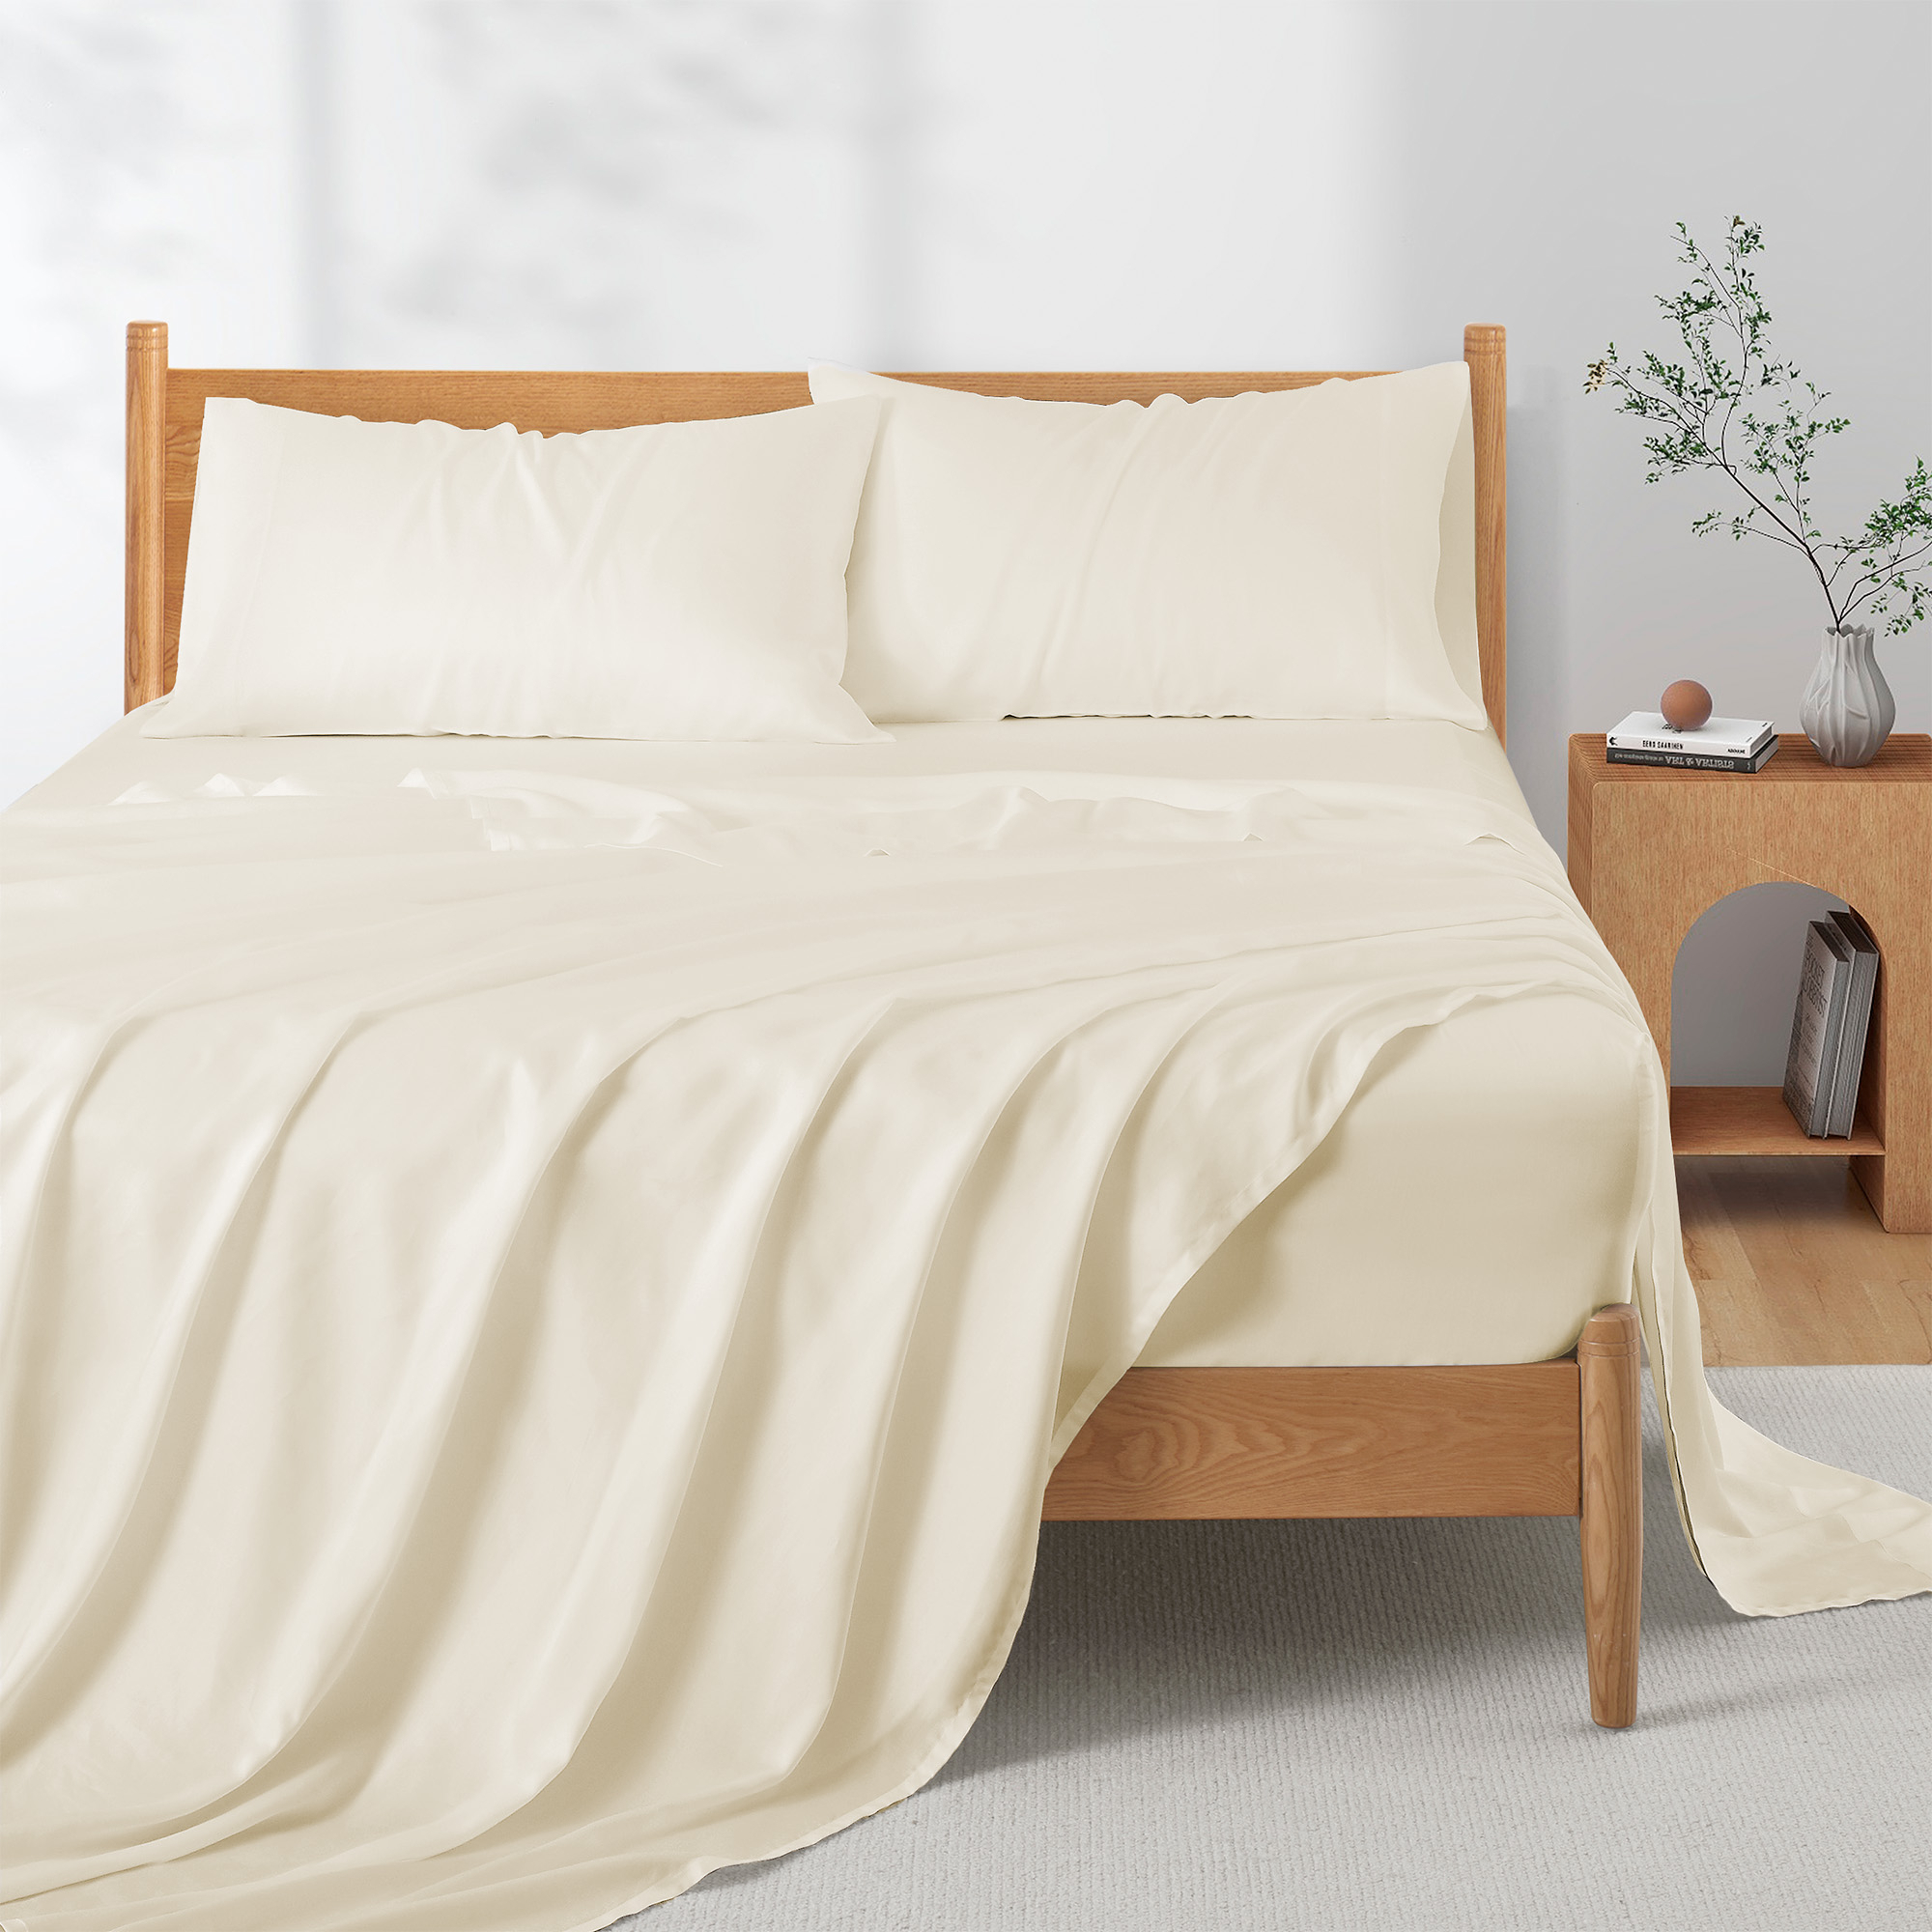 Silky Soft TENCELâ¢ Lyocell Cooling Sheet Set-Breathability And Moisture-wicking Bedding Set - Cannoli Cream, King